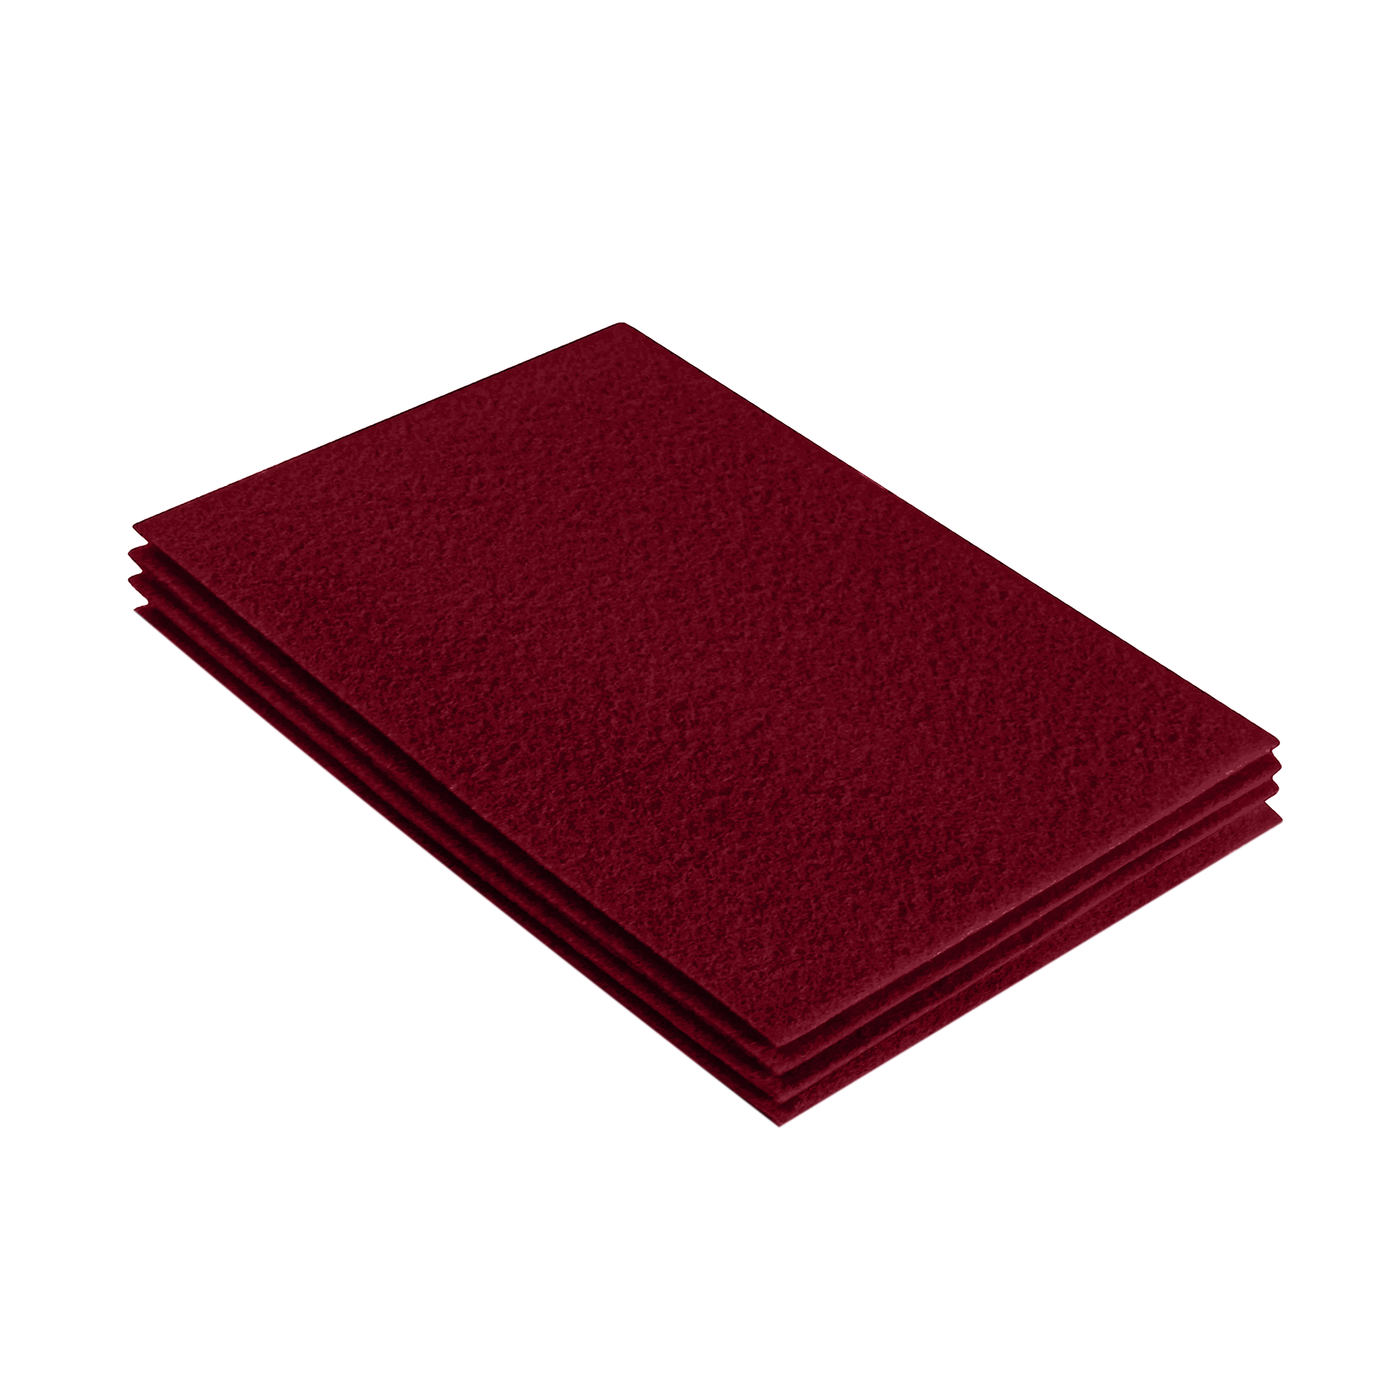 Acrylic Felt 9"X12" Sheet Packs | Dark Red - FabricLA.com